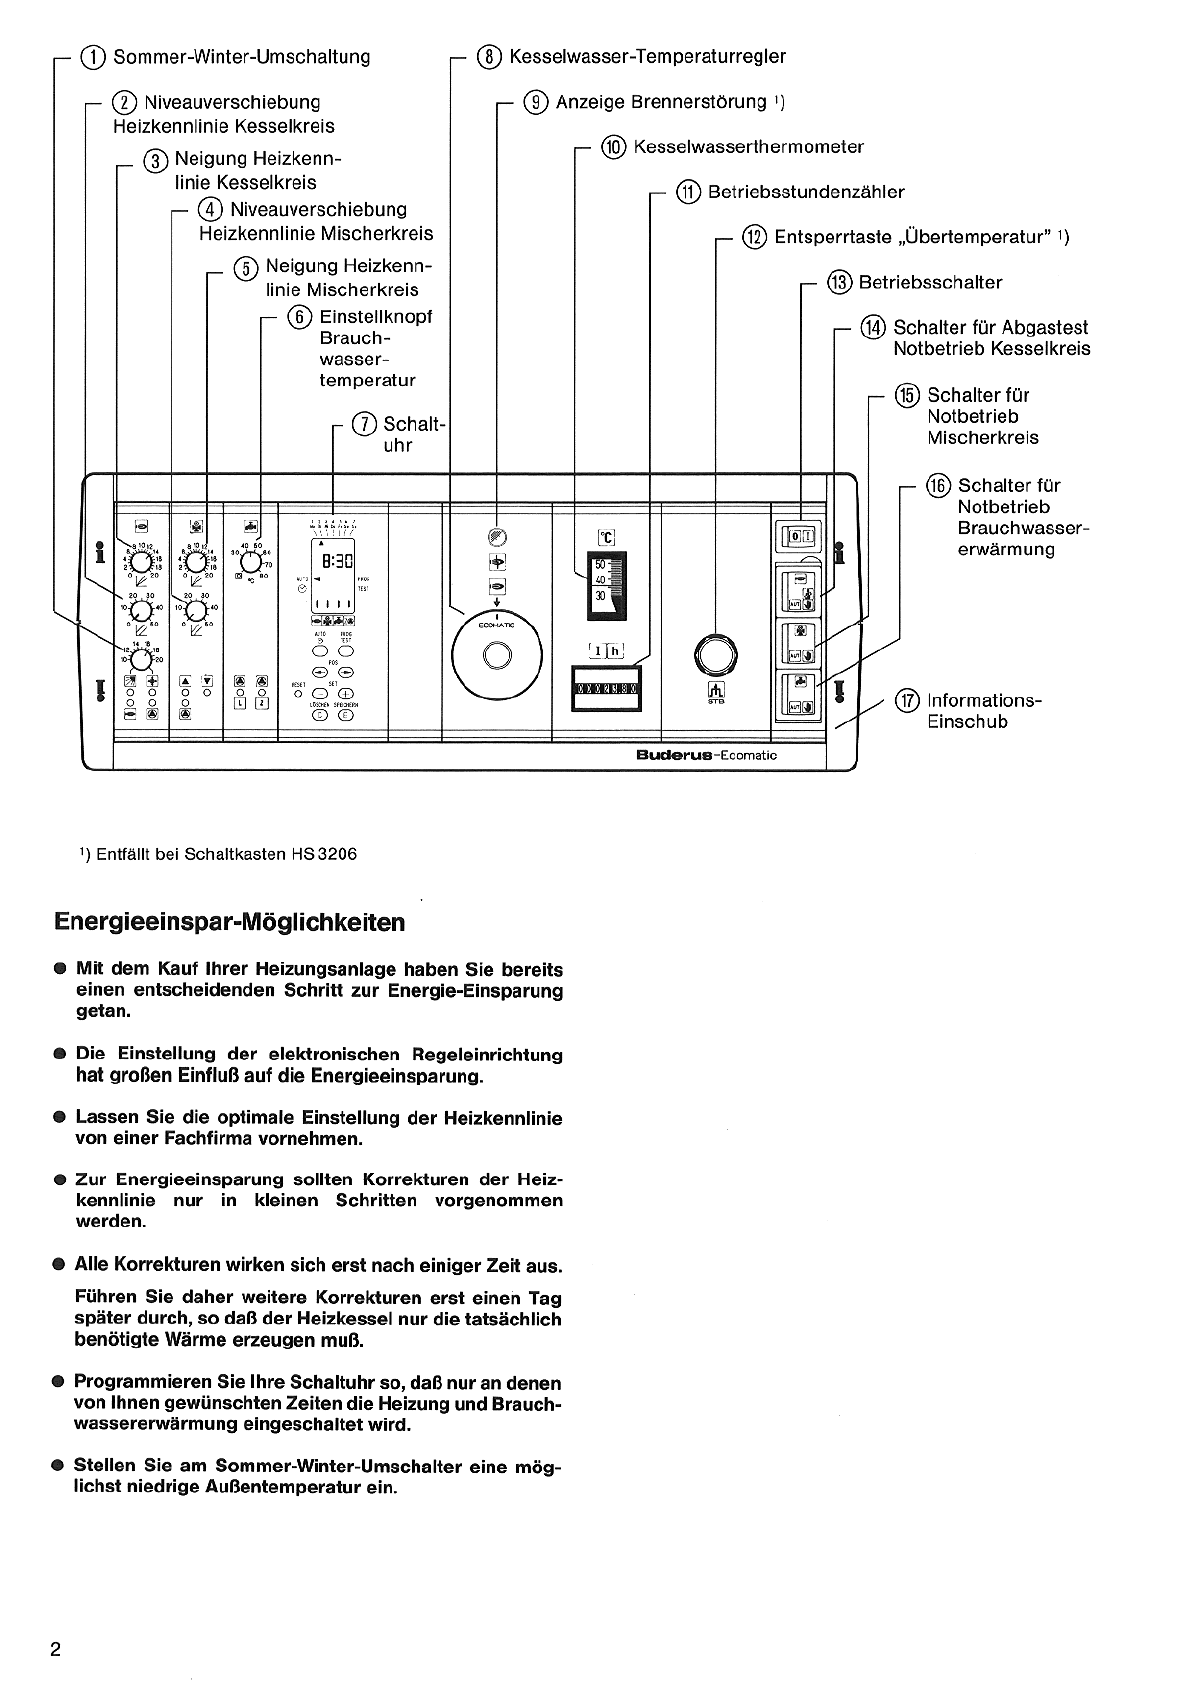 buderus ecomatic 4000 schaltplan pdf to doc